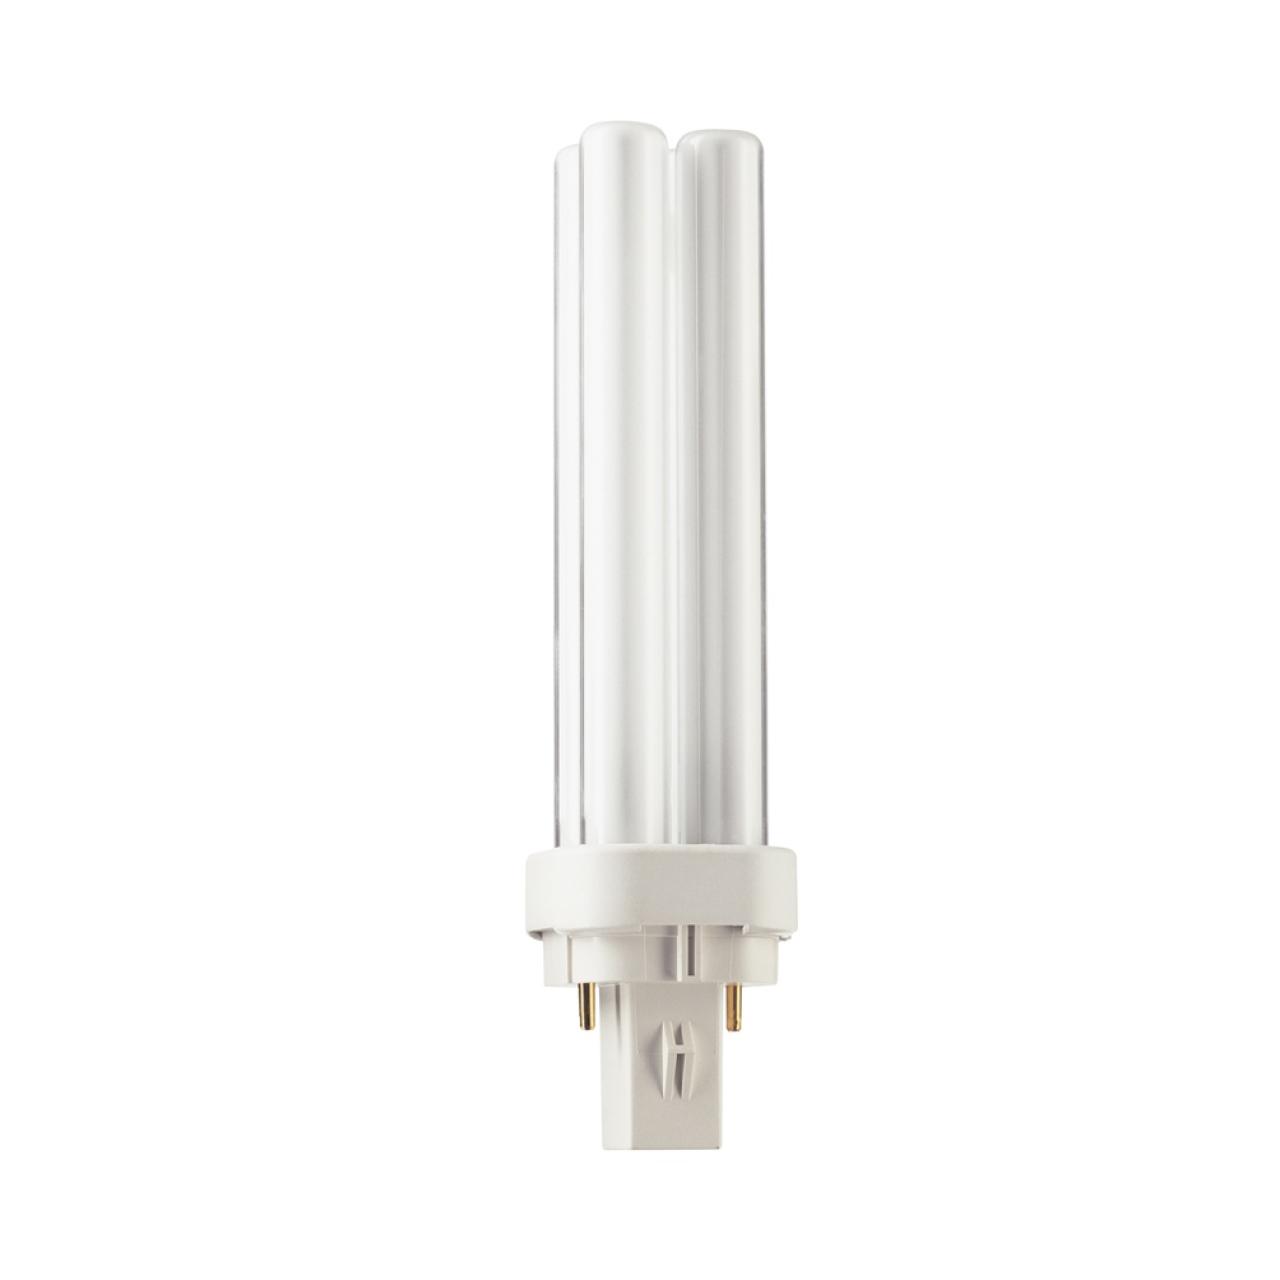 PHILIPS Lighting Leuchtstoffröhre TL-Mini, G5, 13 W, 2700 K, 1000 lm, dimmbar - 53,1 cm